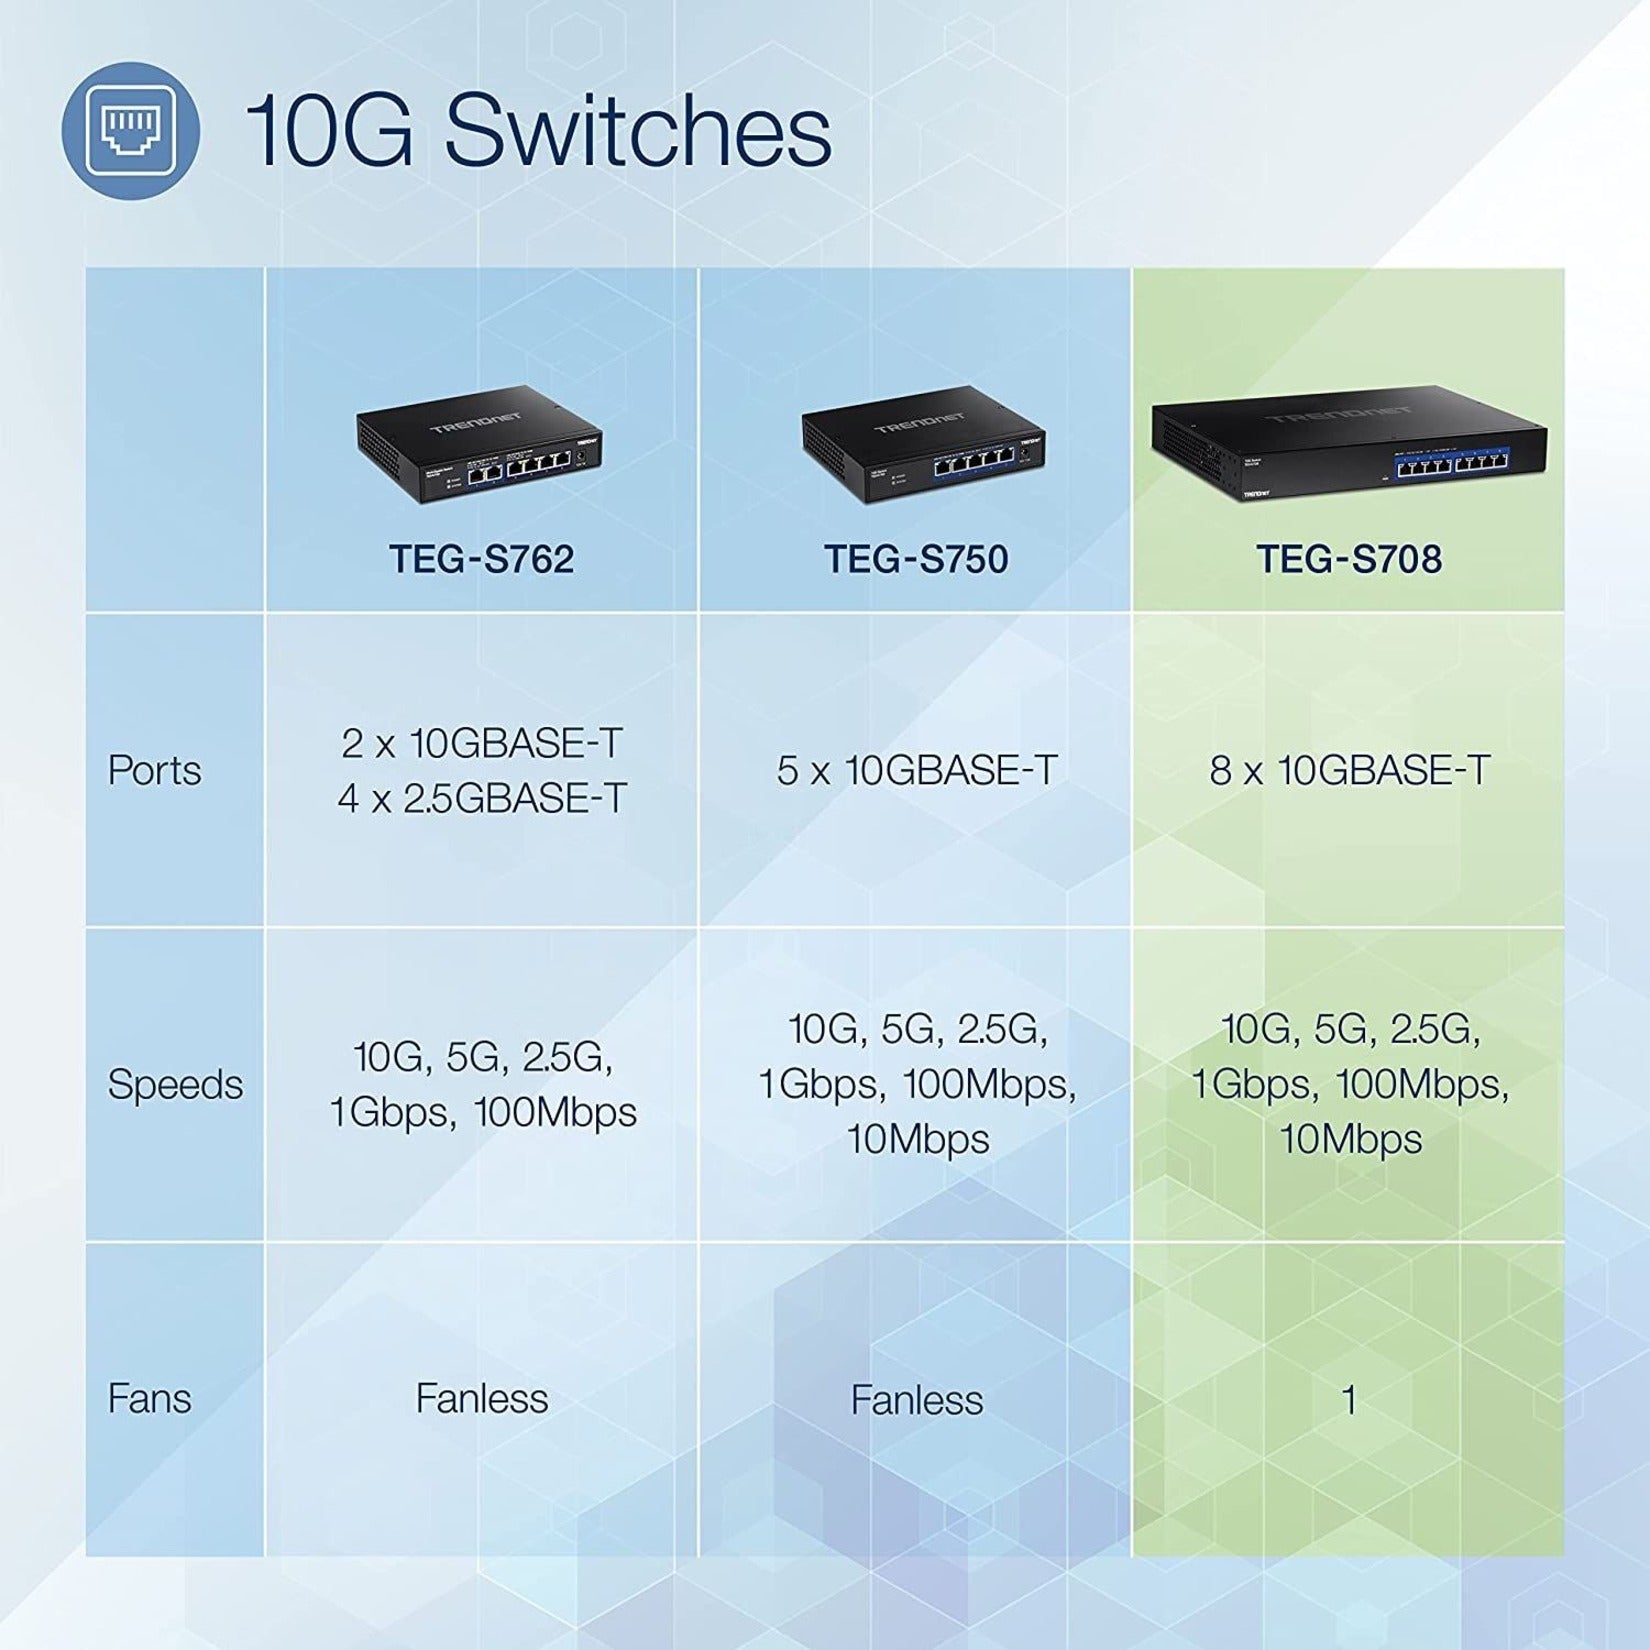 10G Switches – 8-Port 10G Switch